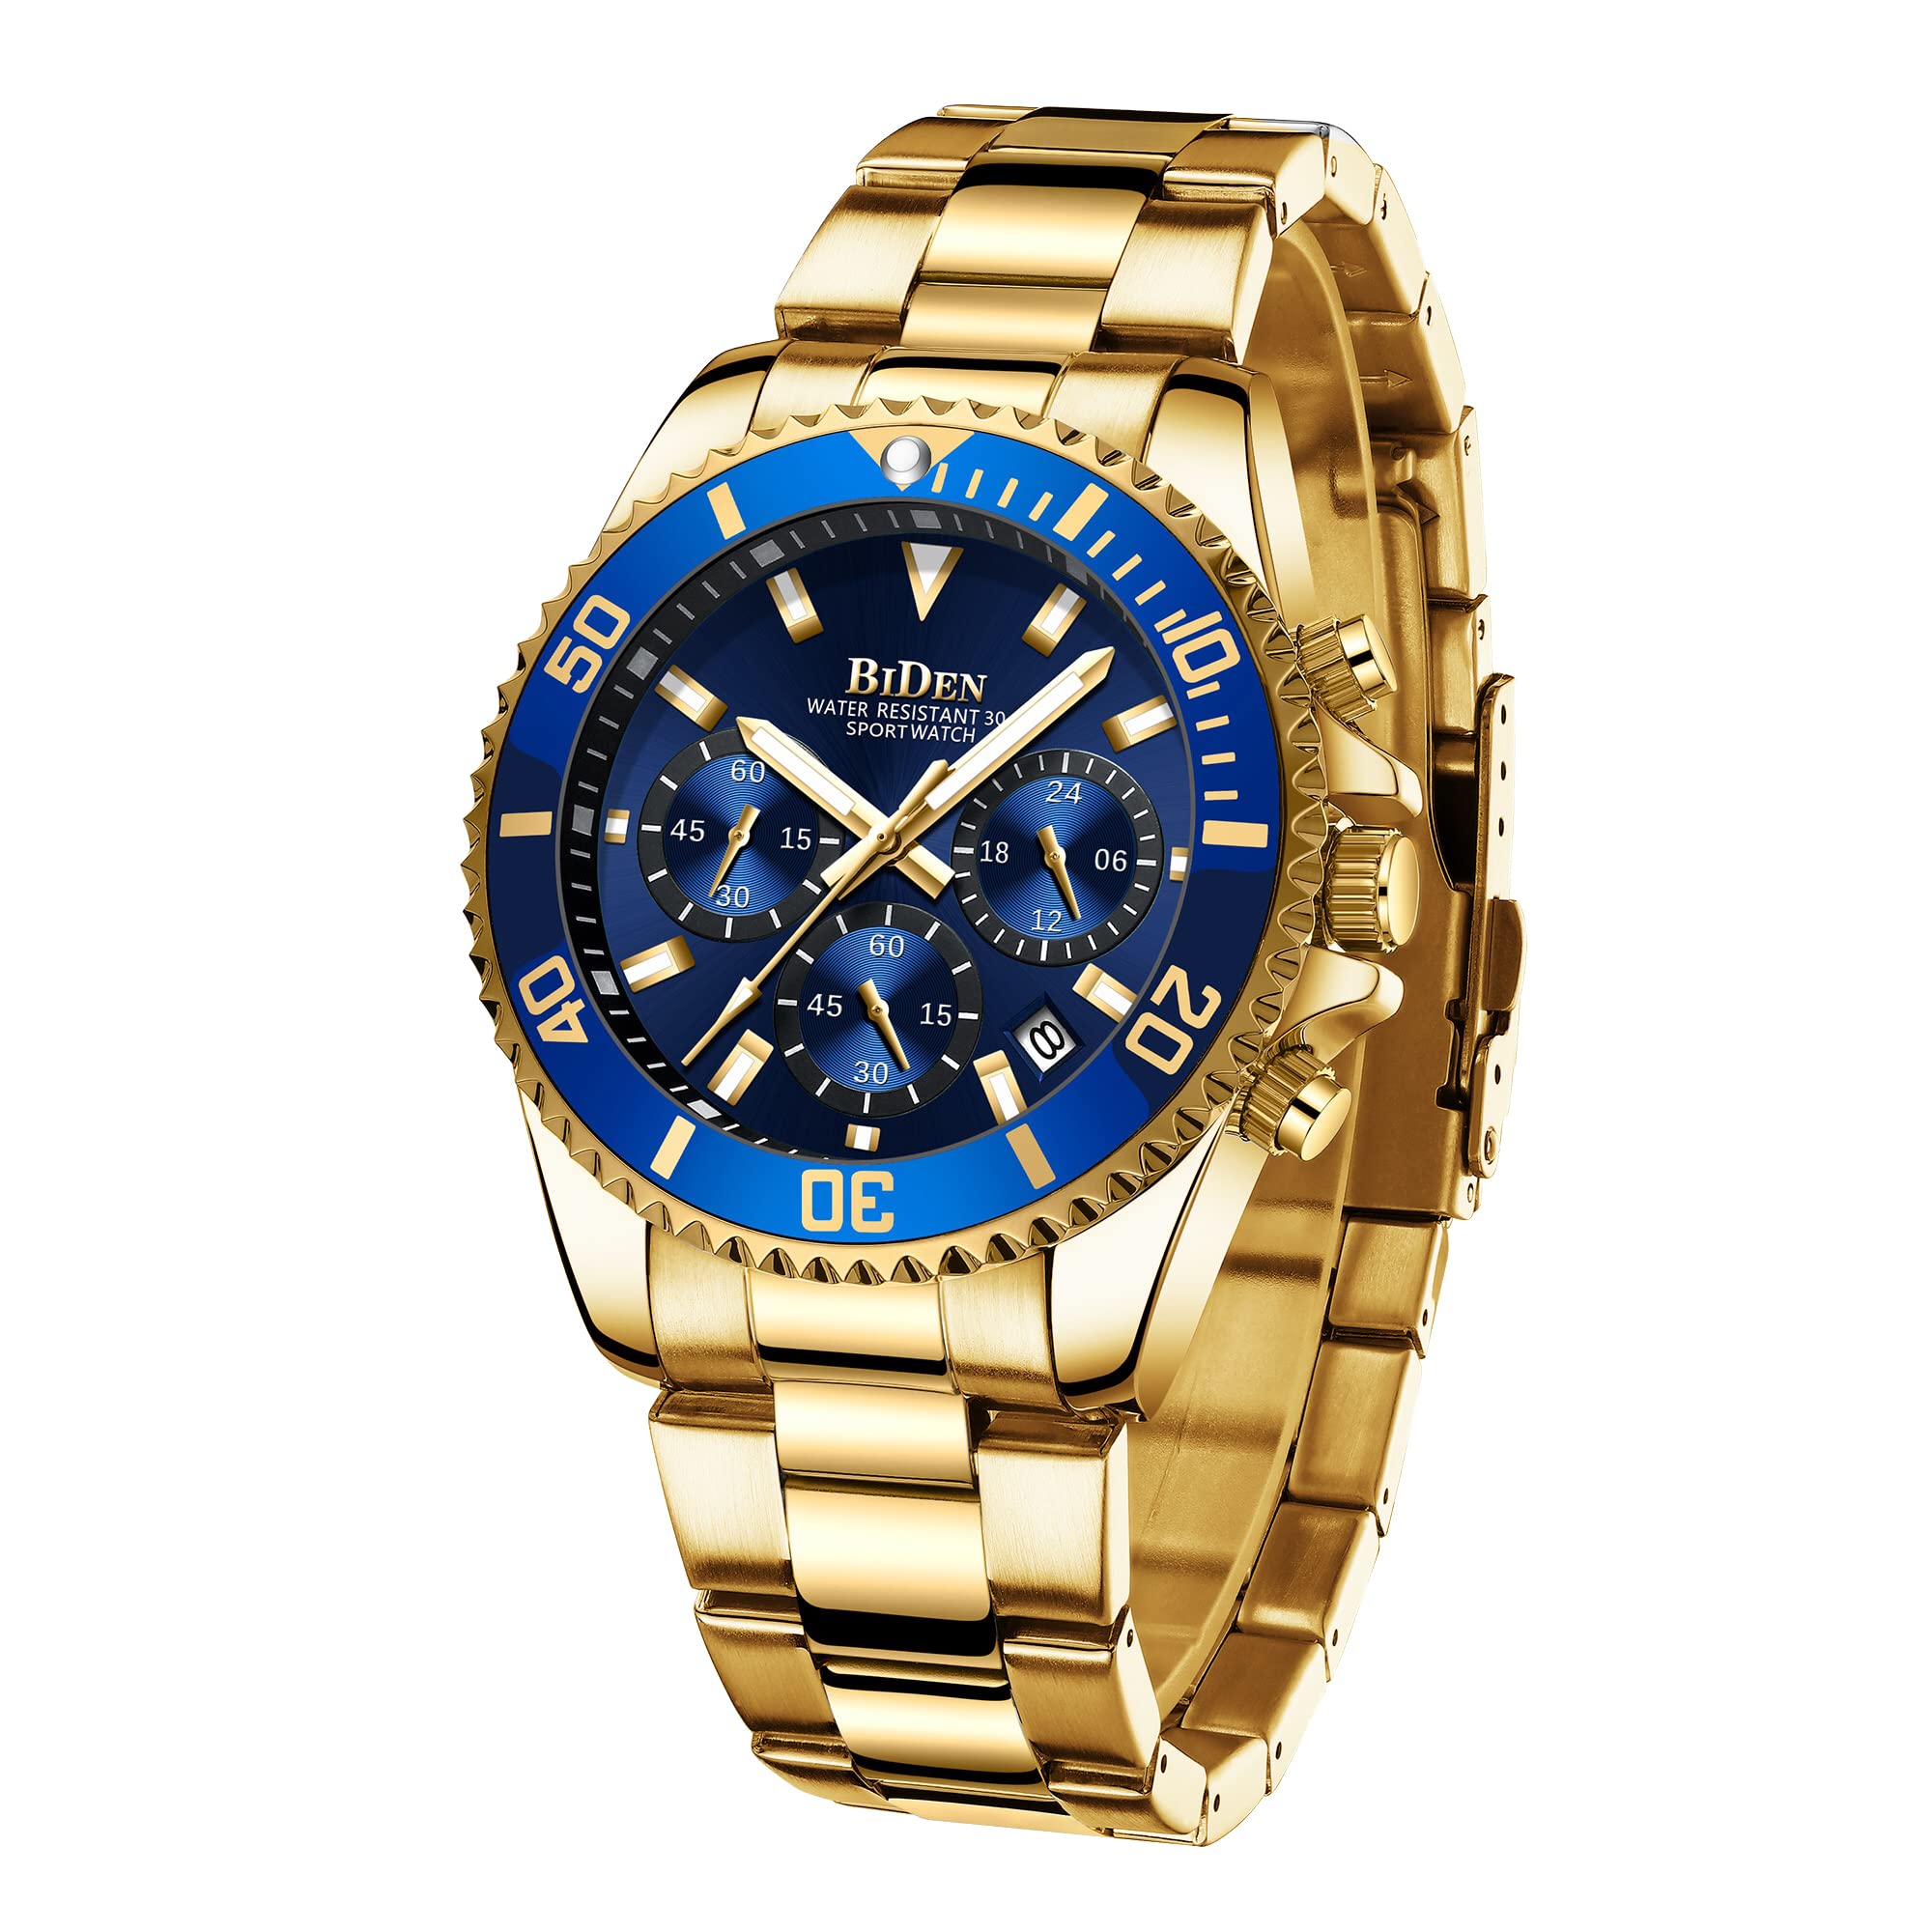 BIDEN Mens Watches Chronograph Gold Blue Stainless Steel Waterproof Date Analog Quartz Watch Business Casual Fashion Wrist Wa